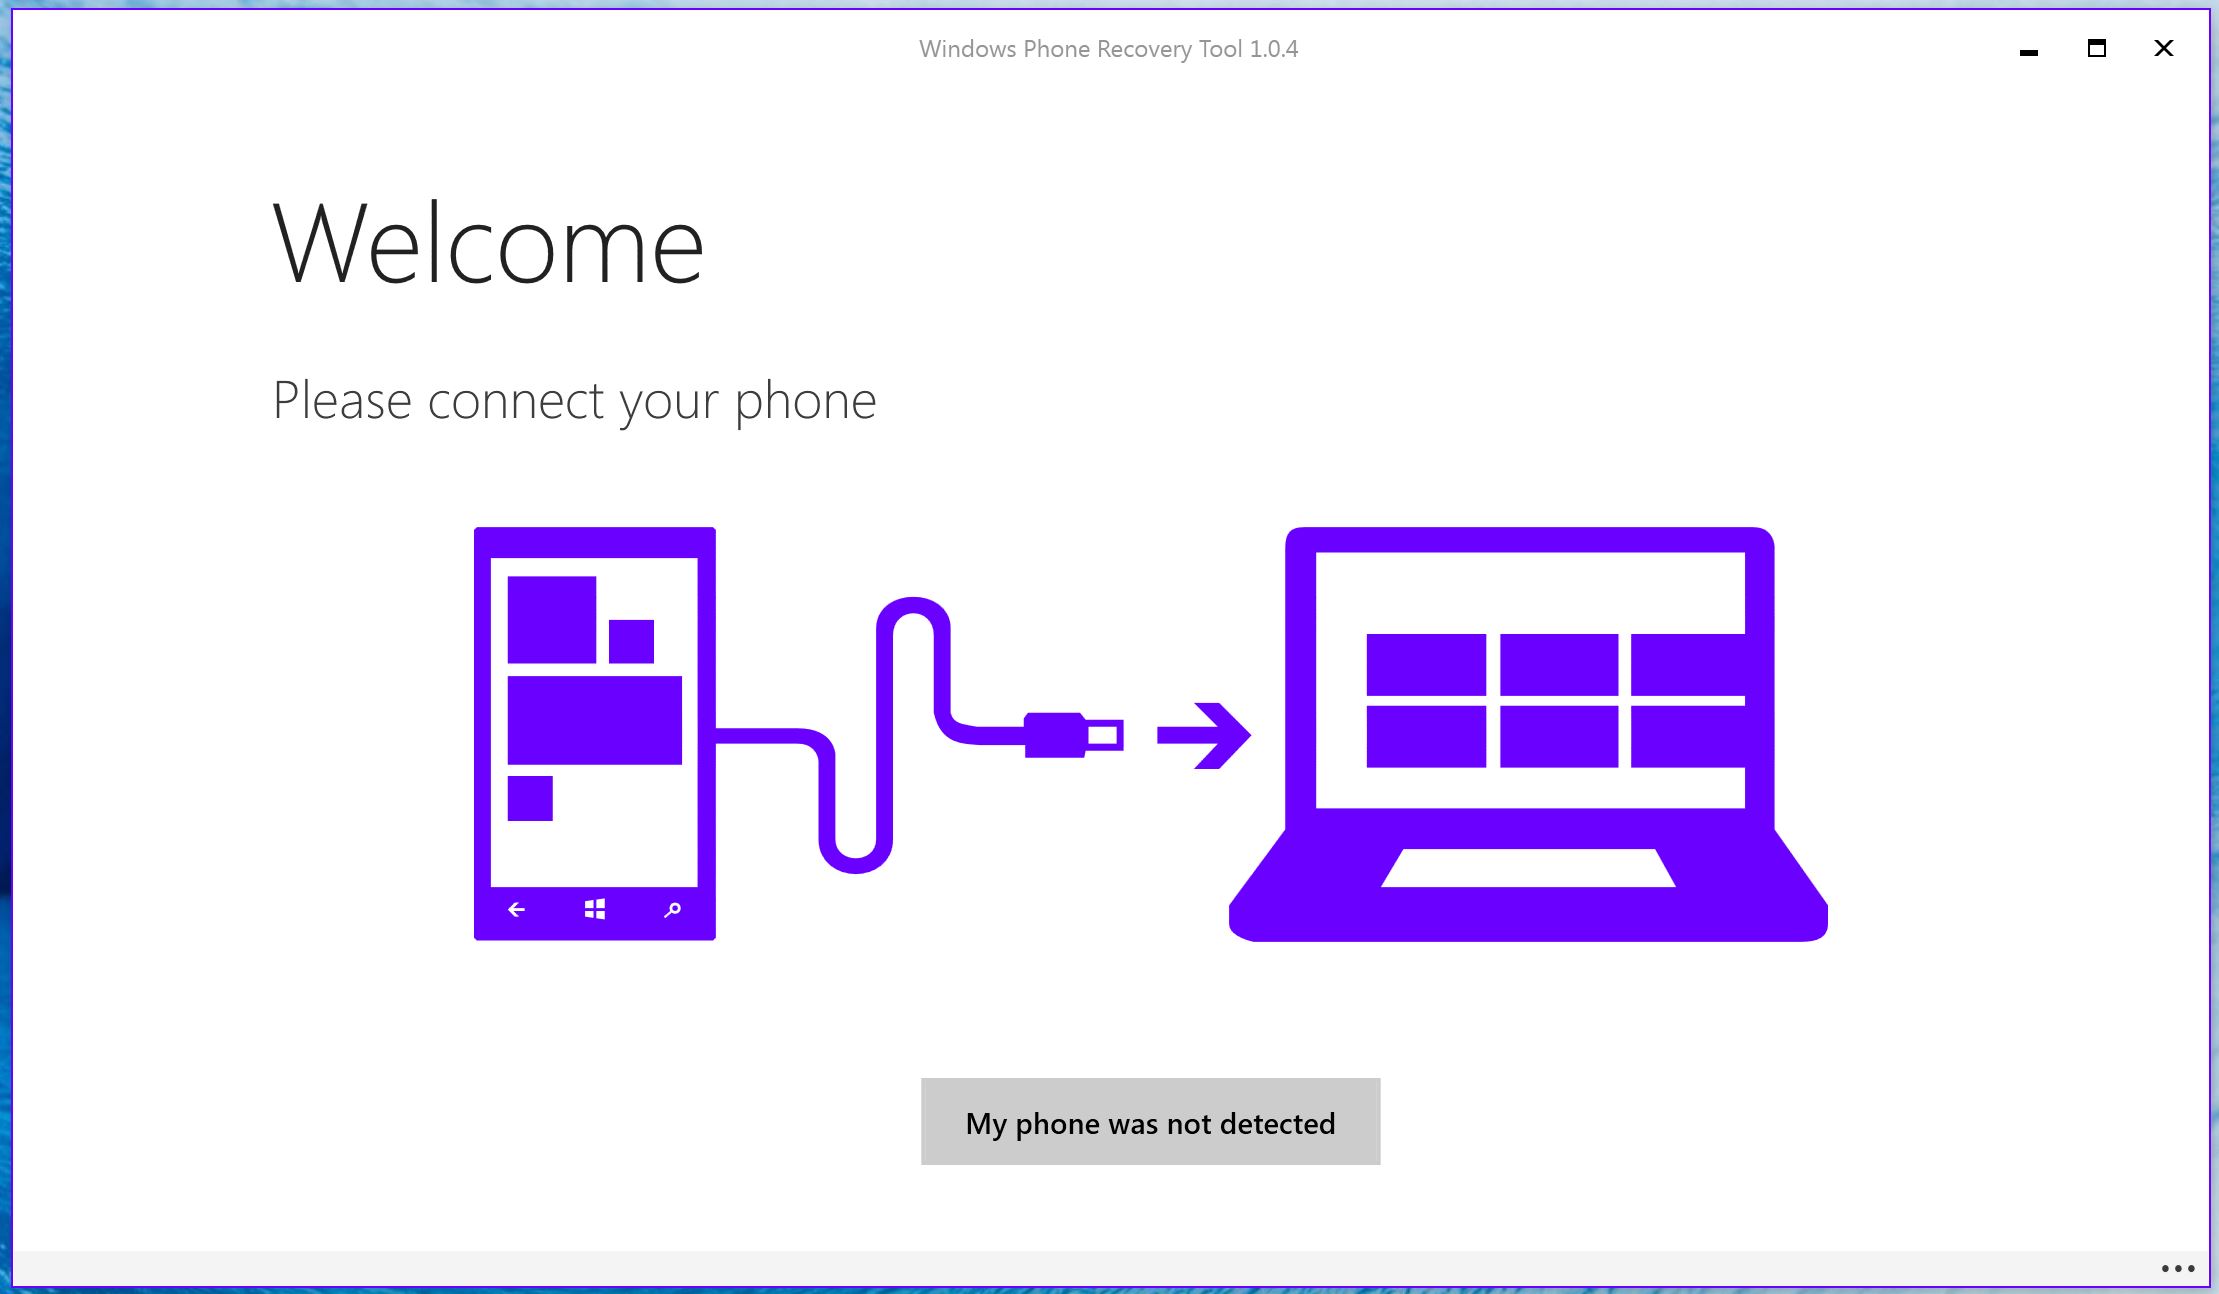 Windows Phone Recovery Tool 1